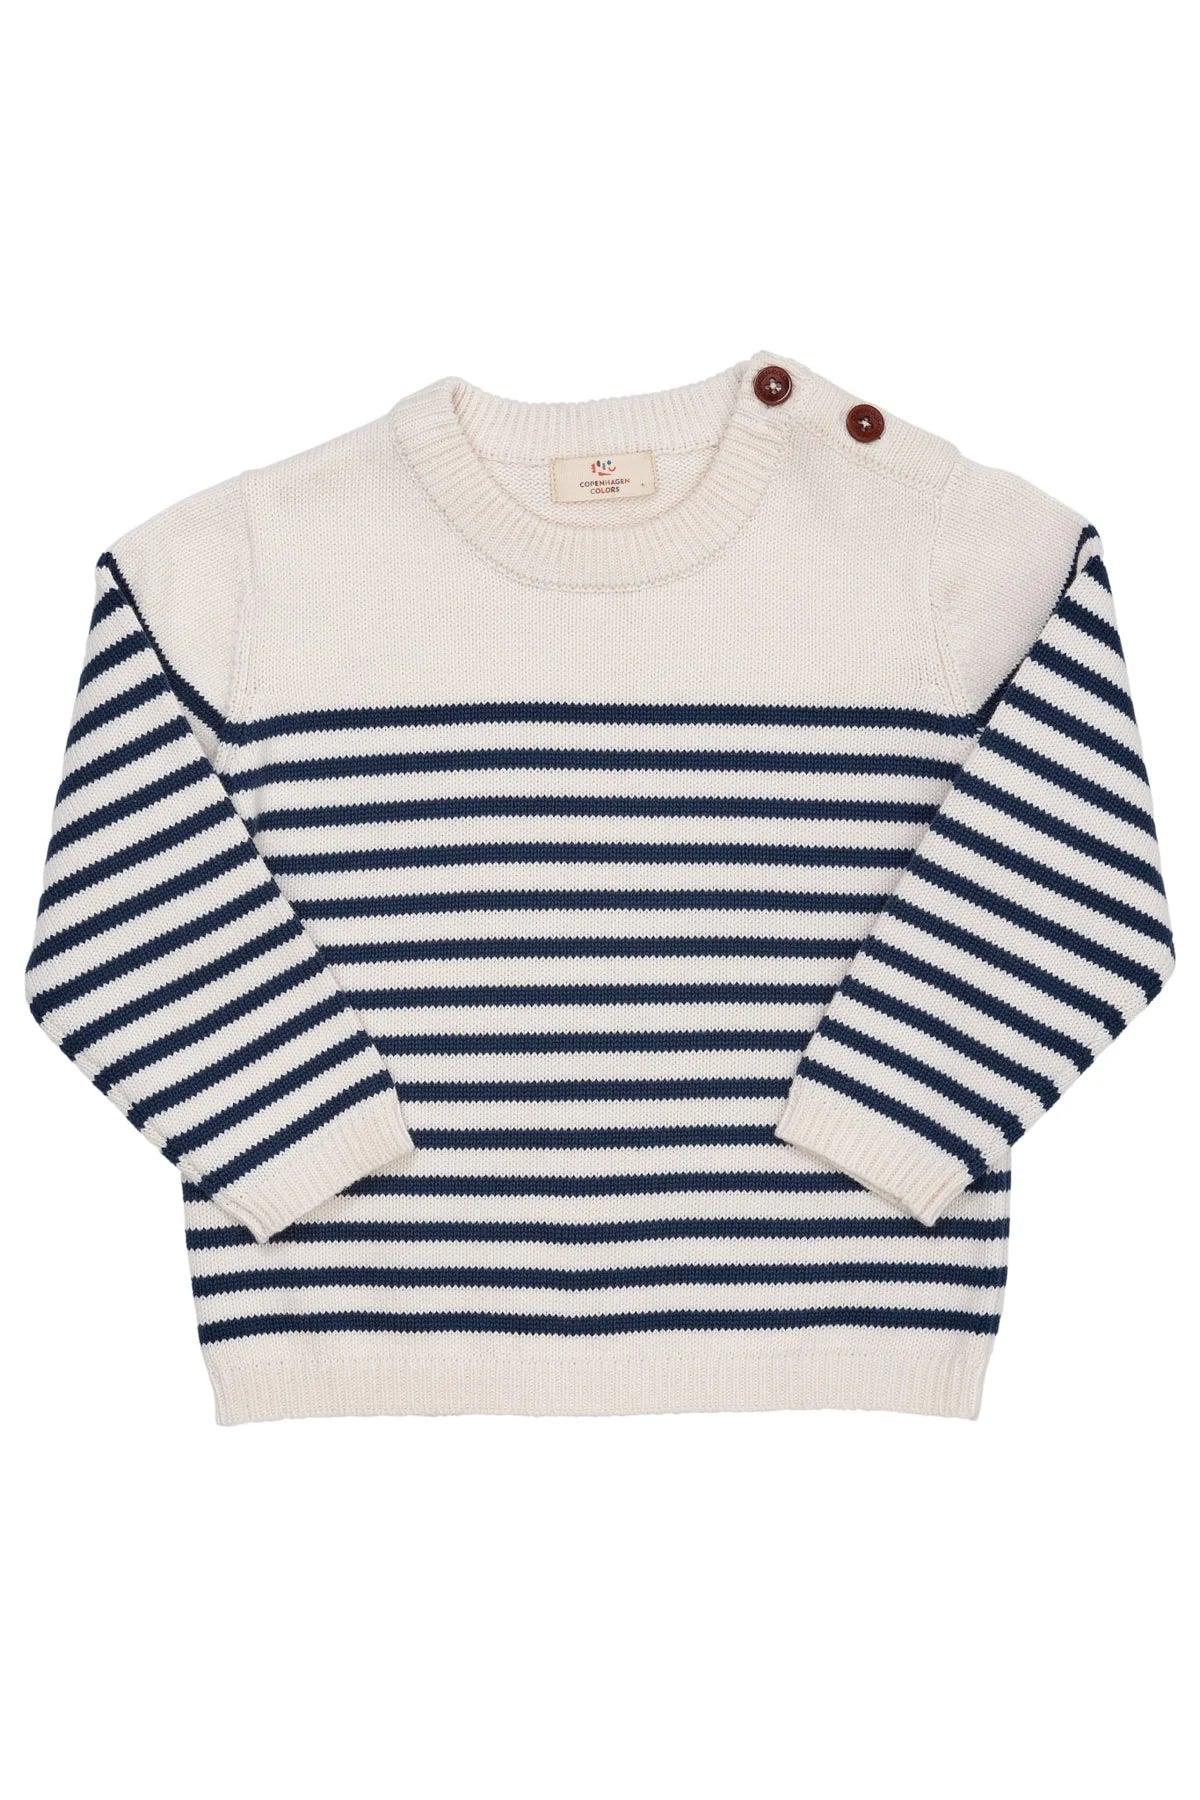 Knitted Striped Sailor Jumper, Cream Navy Combi, Copenhagen Colors, 100% Organic Cotton